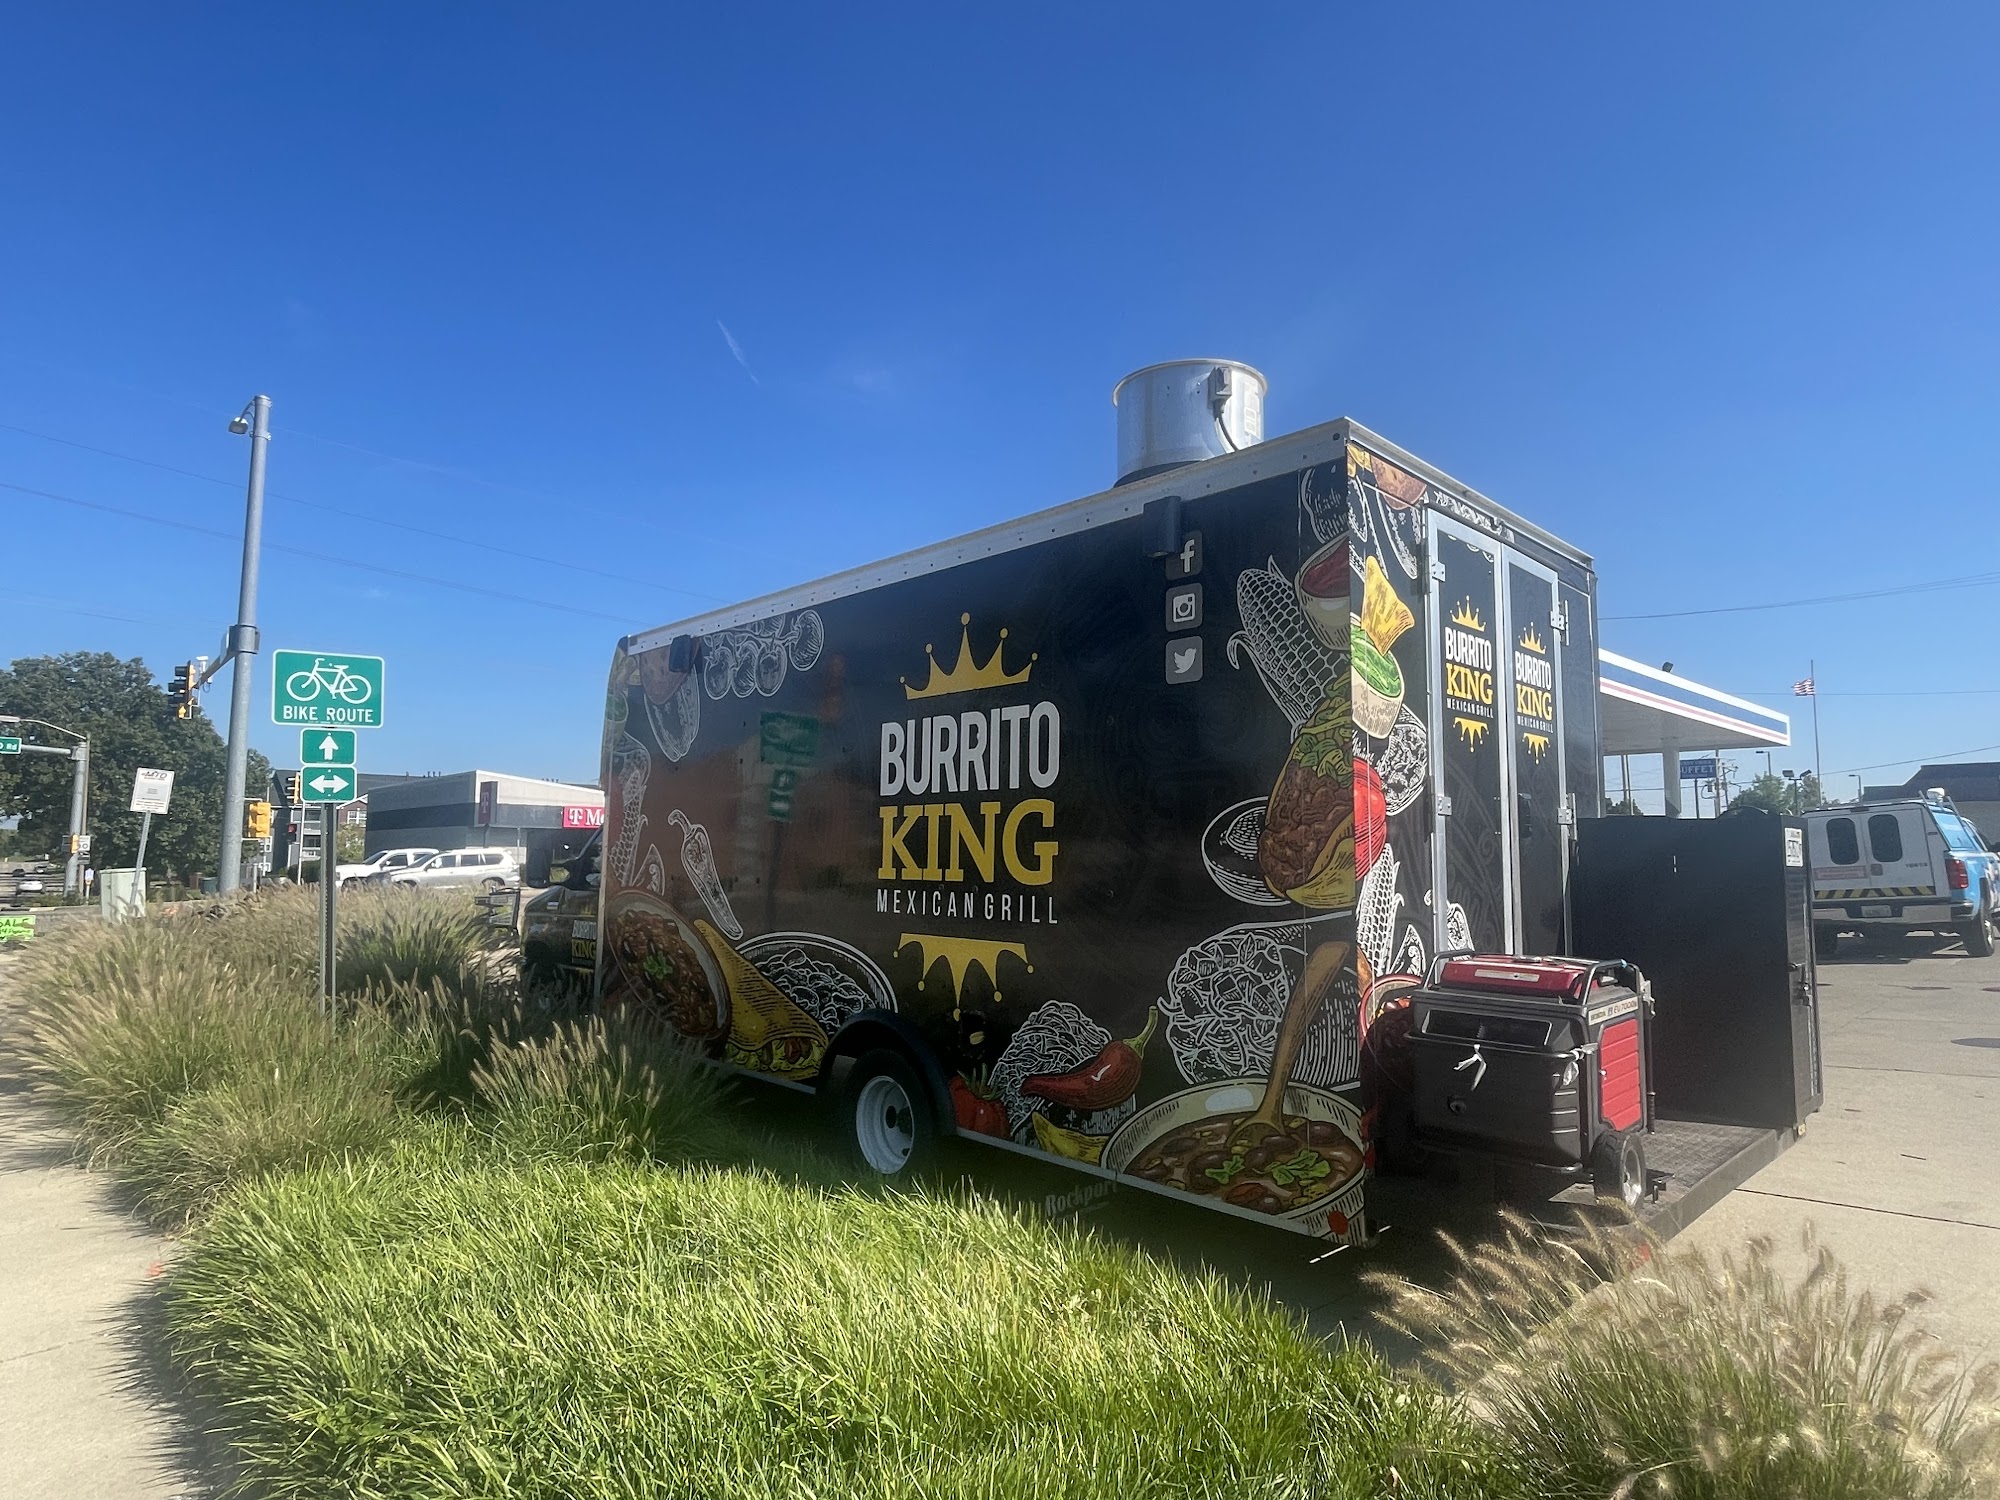 Burrito King Mexican Grill - Food Truck Marathon gas